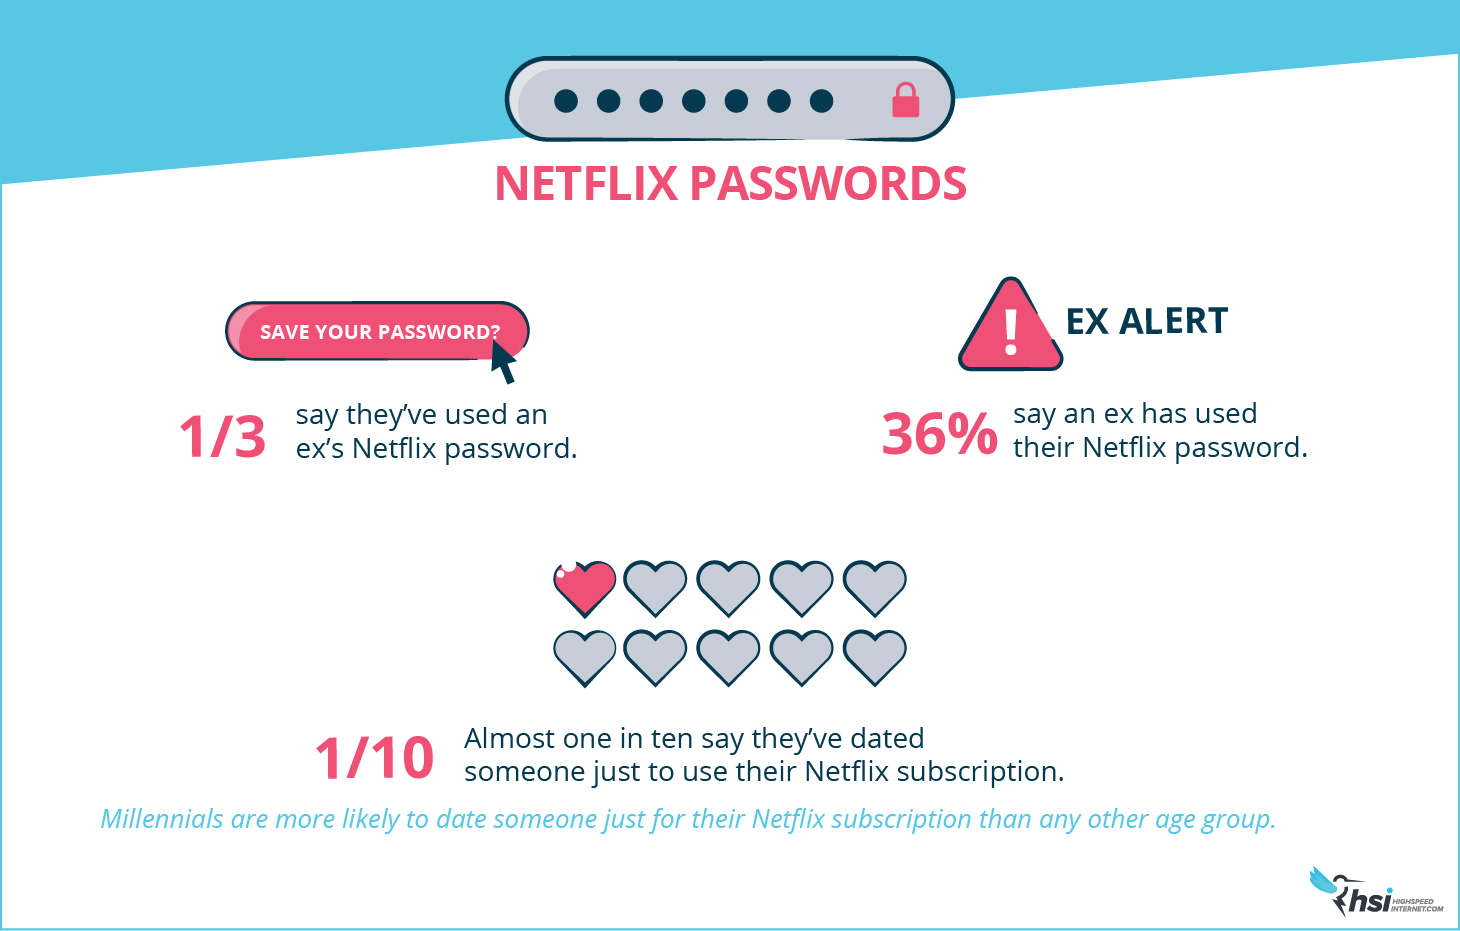 Naughty Netflix Habits: Sharing Netflix Passwords